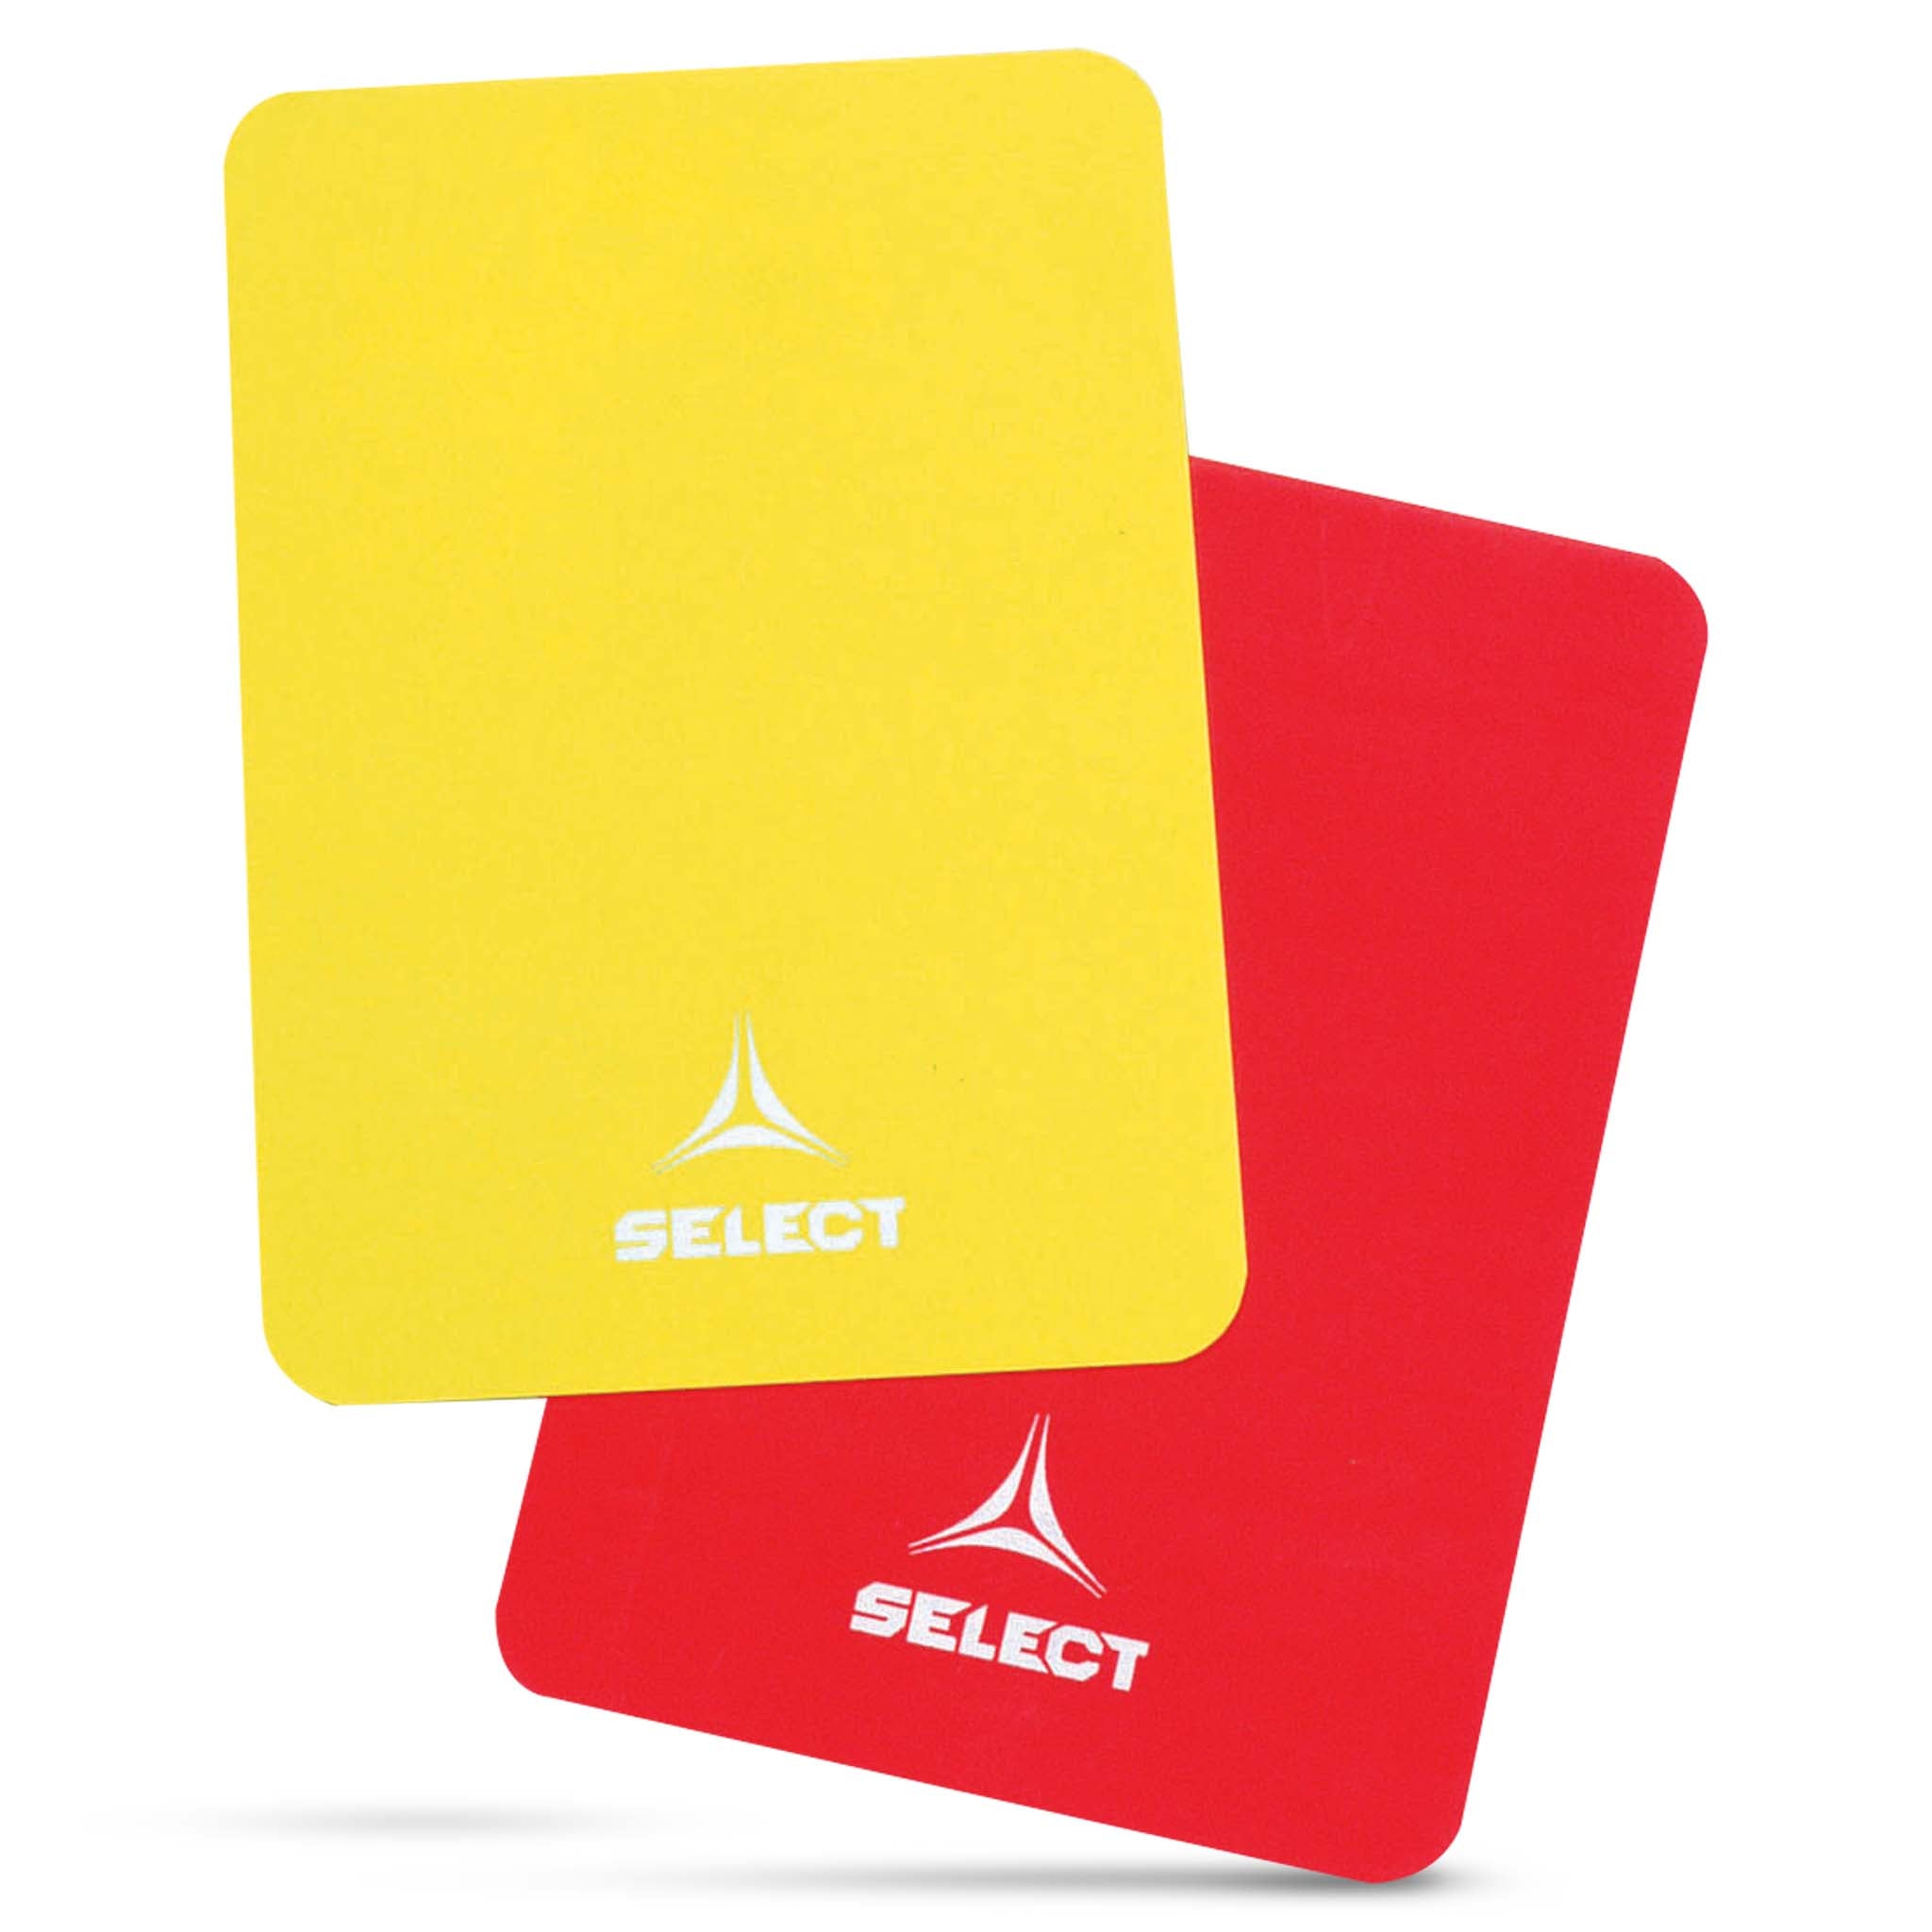 Referee cards